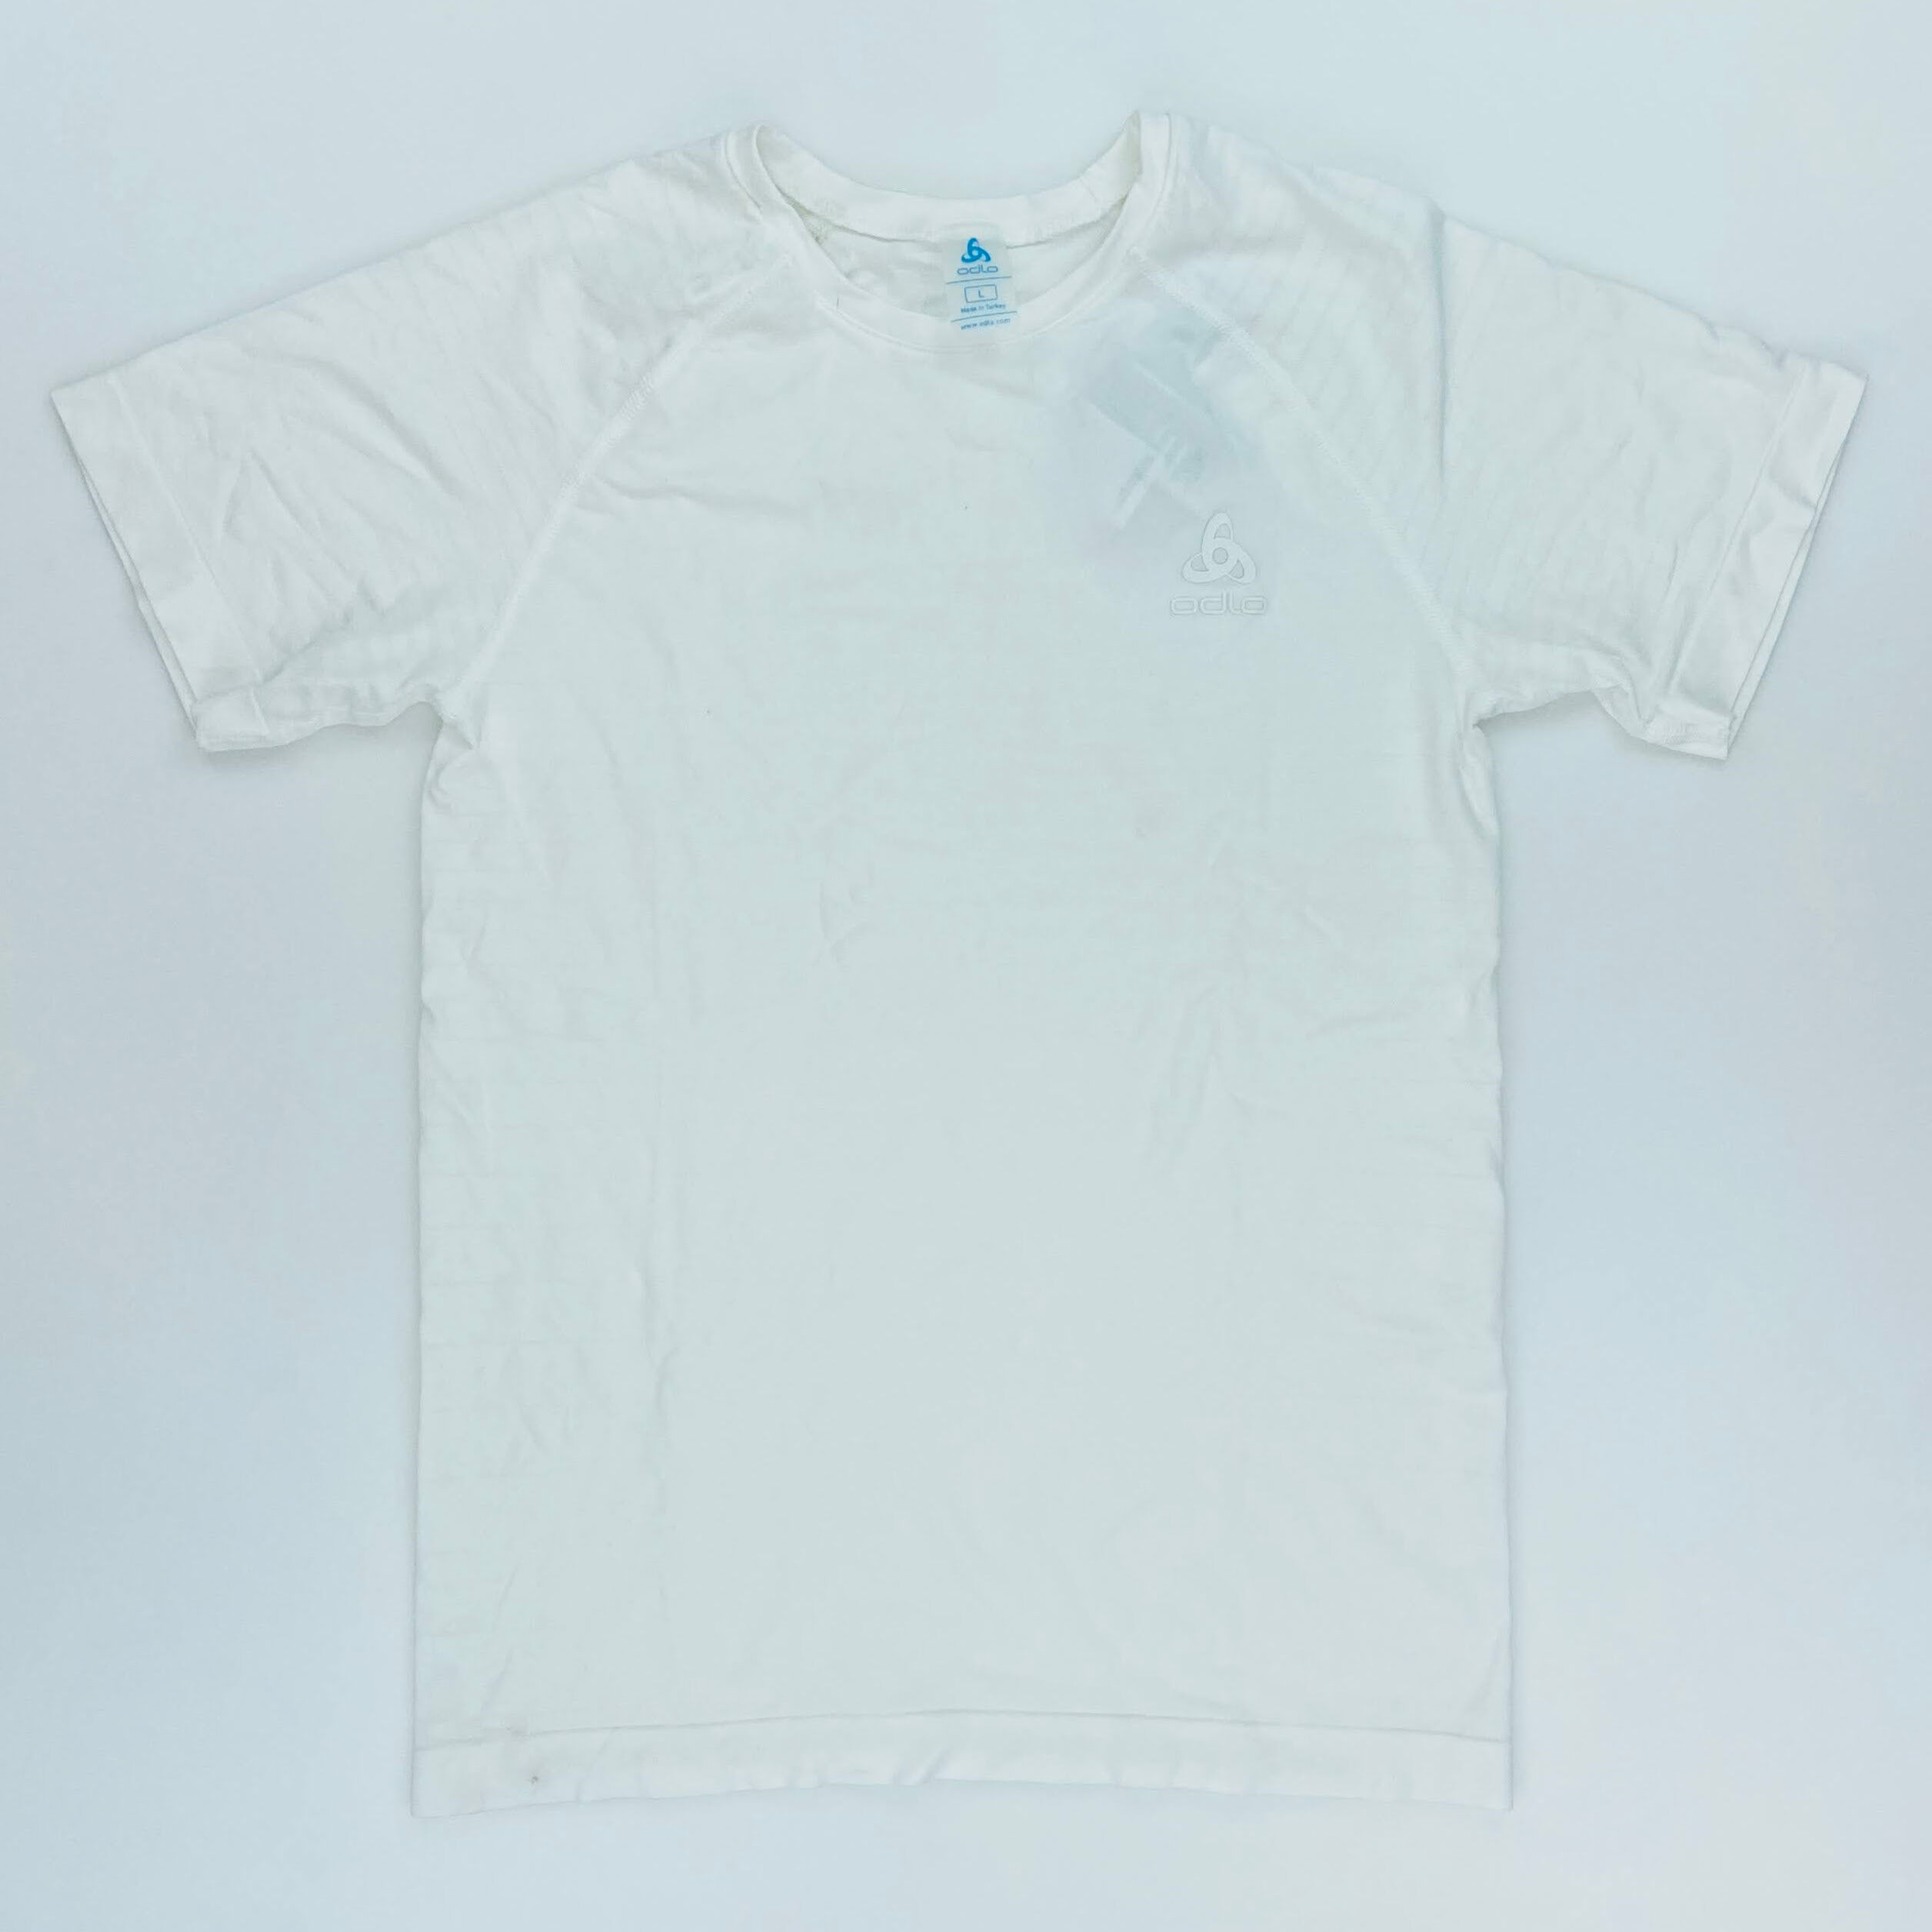 Odlo Performance Light - T-shirt di seconda mano - Donna - Bianco - L | Hardloop